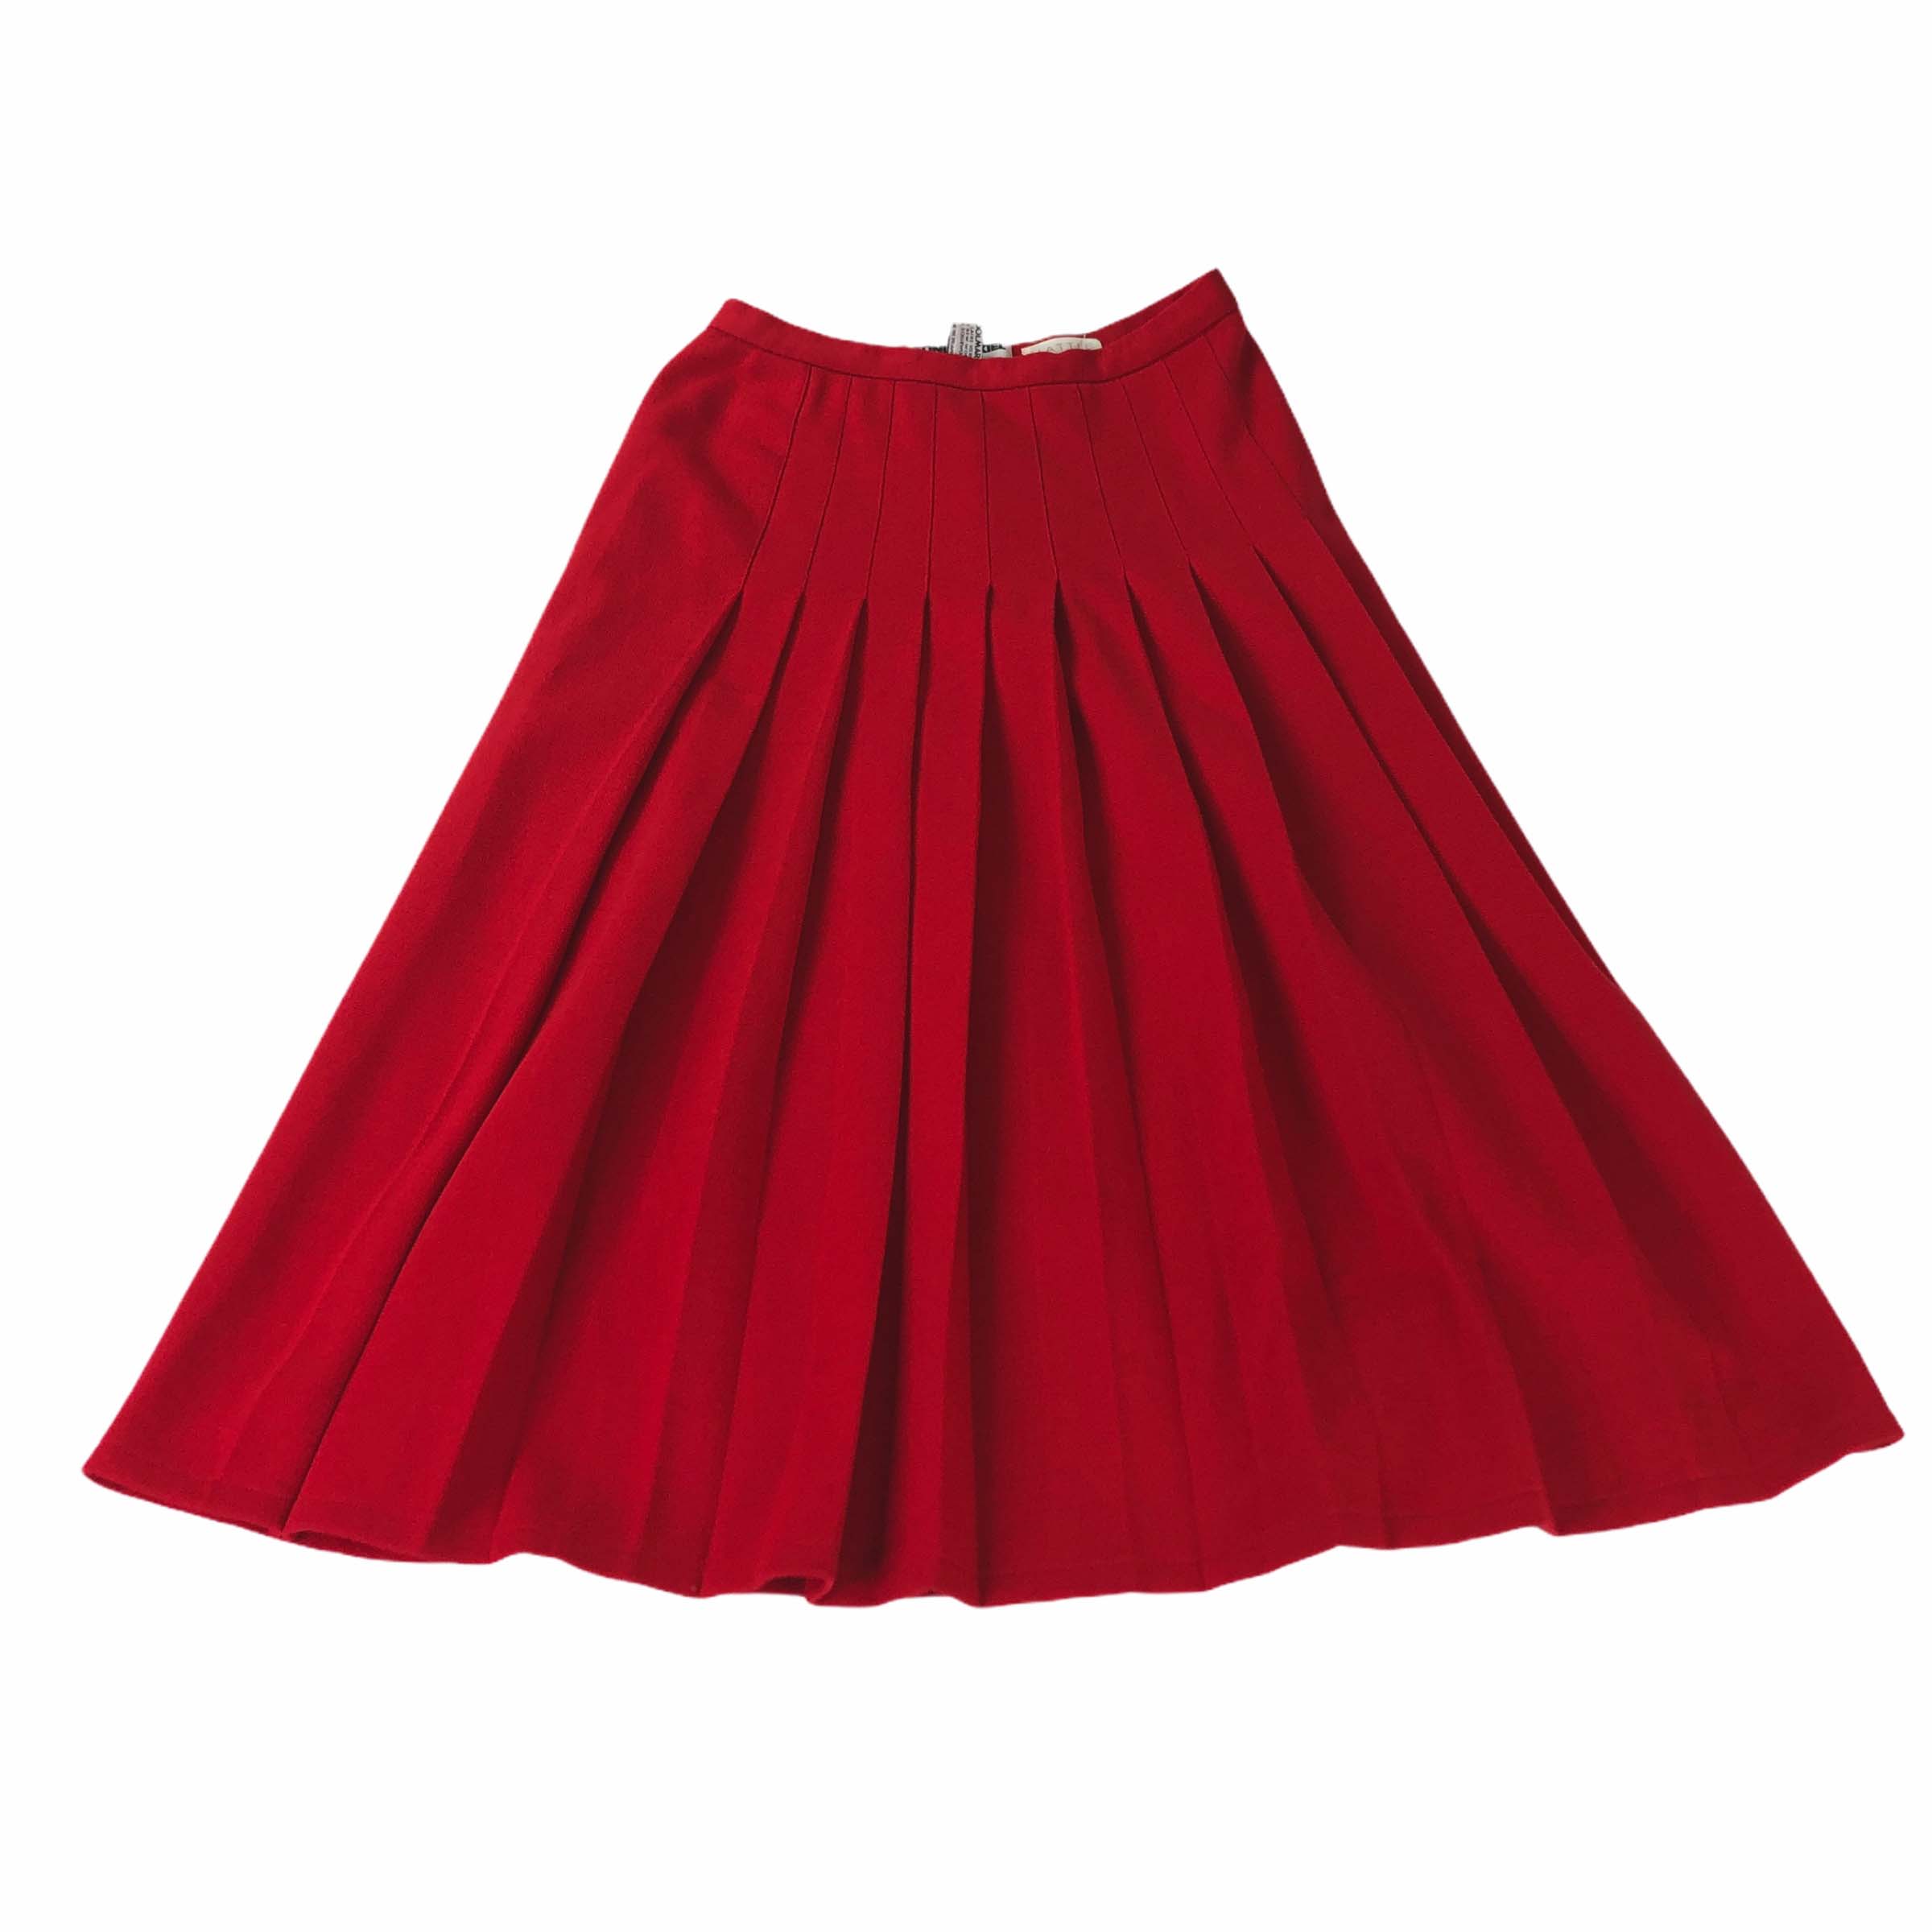 [Sonia Rykiel] Red Wool Skirt - Size Free